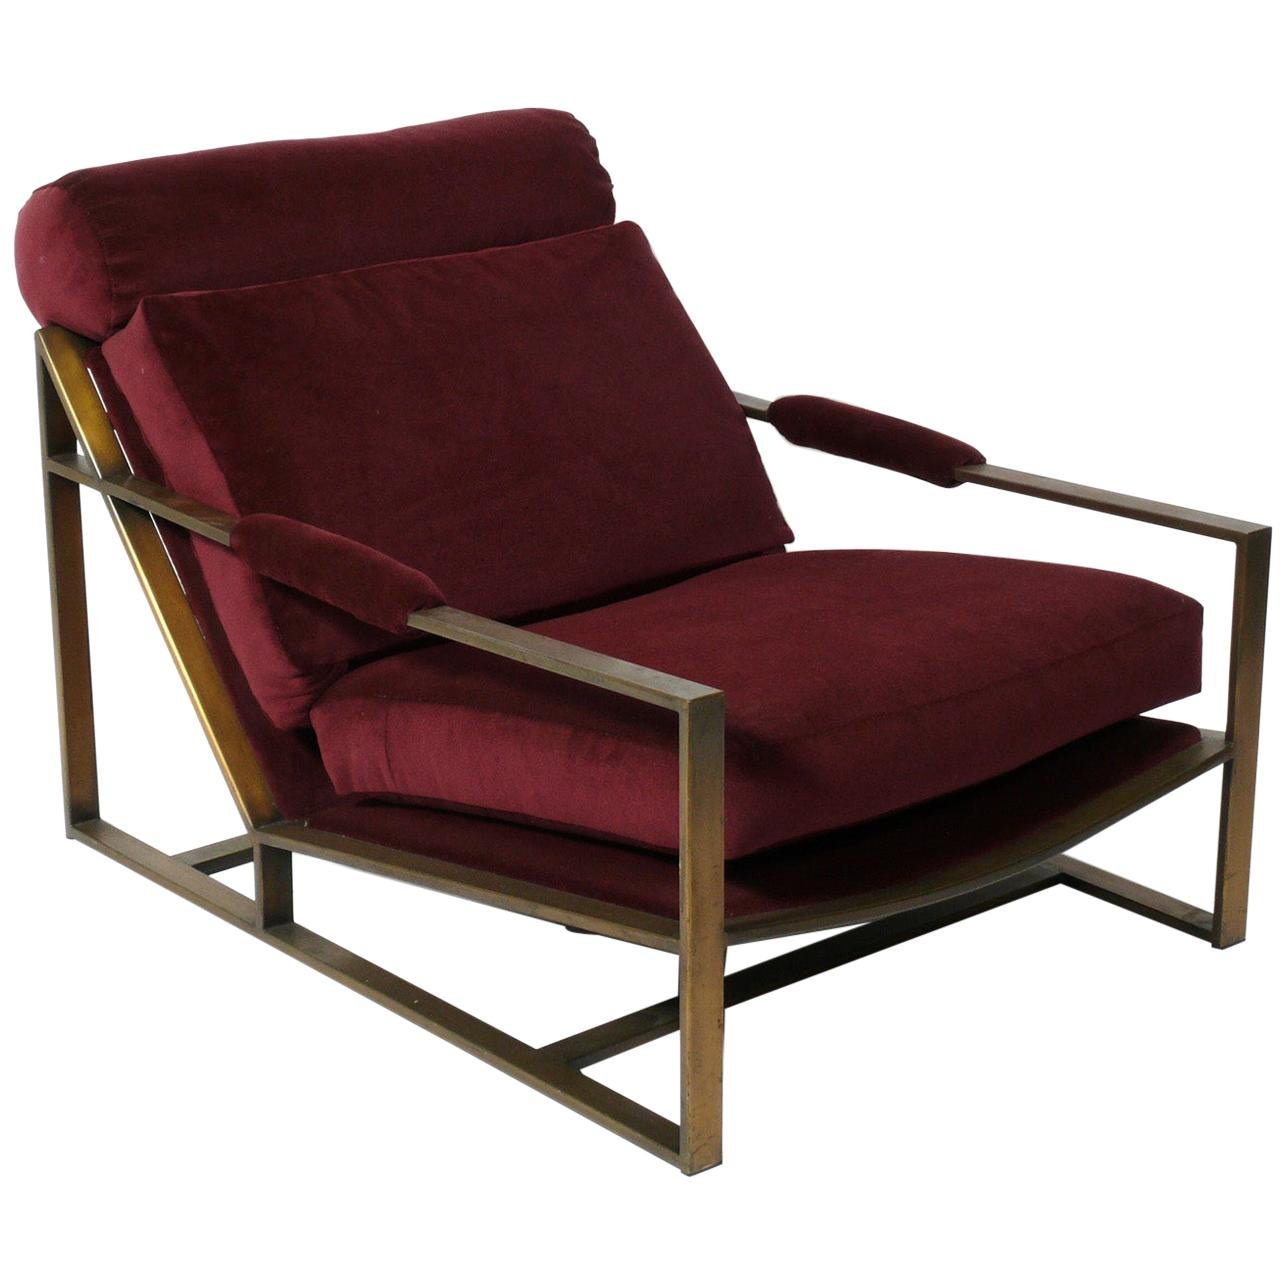 Low Slung Milo Baughman Lounge Chair in Bronze Finish